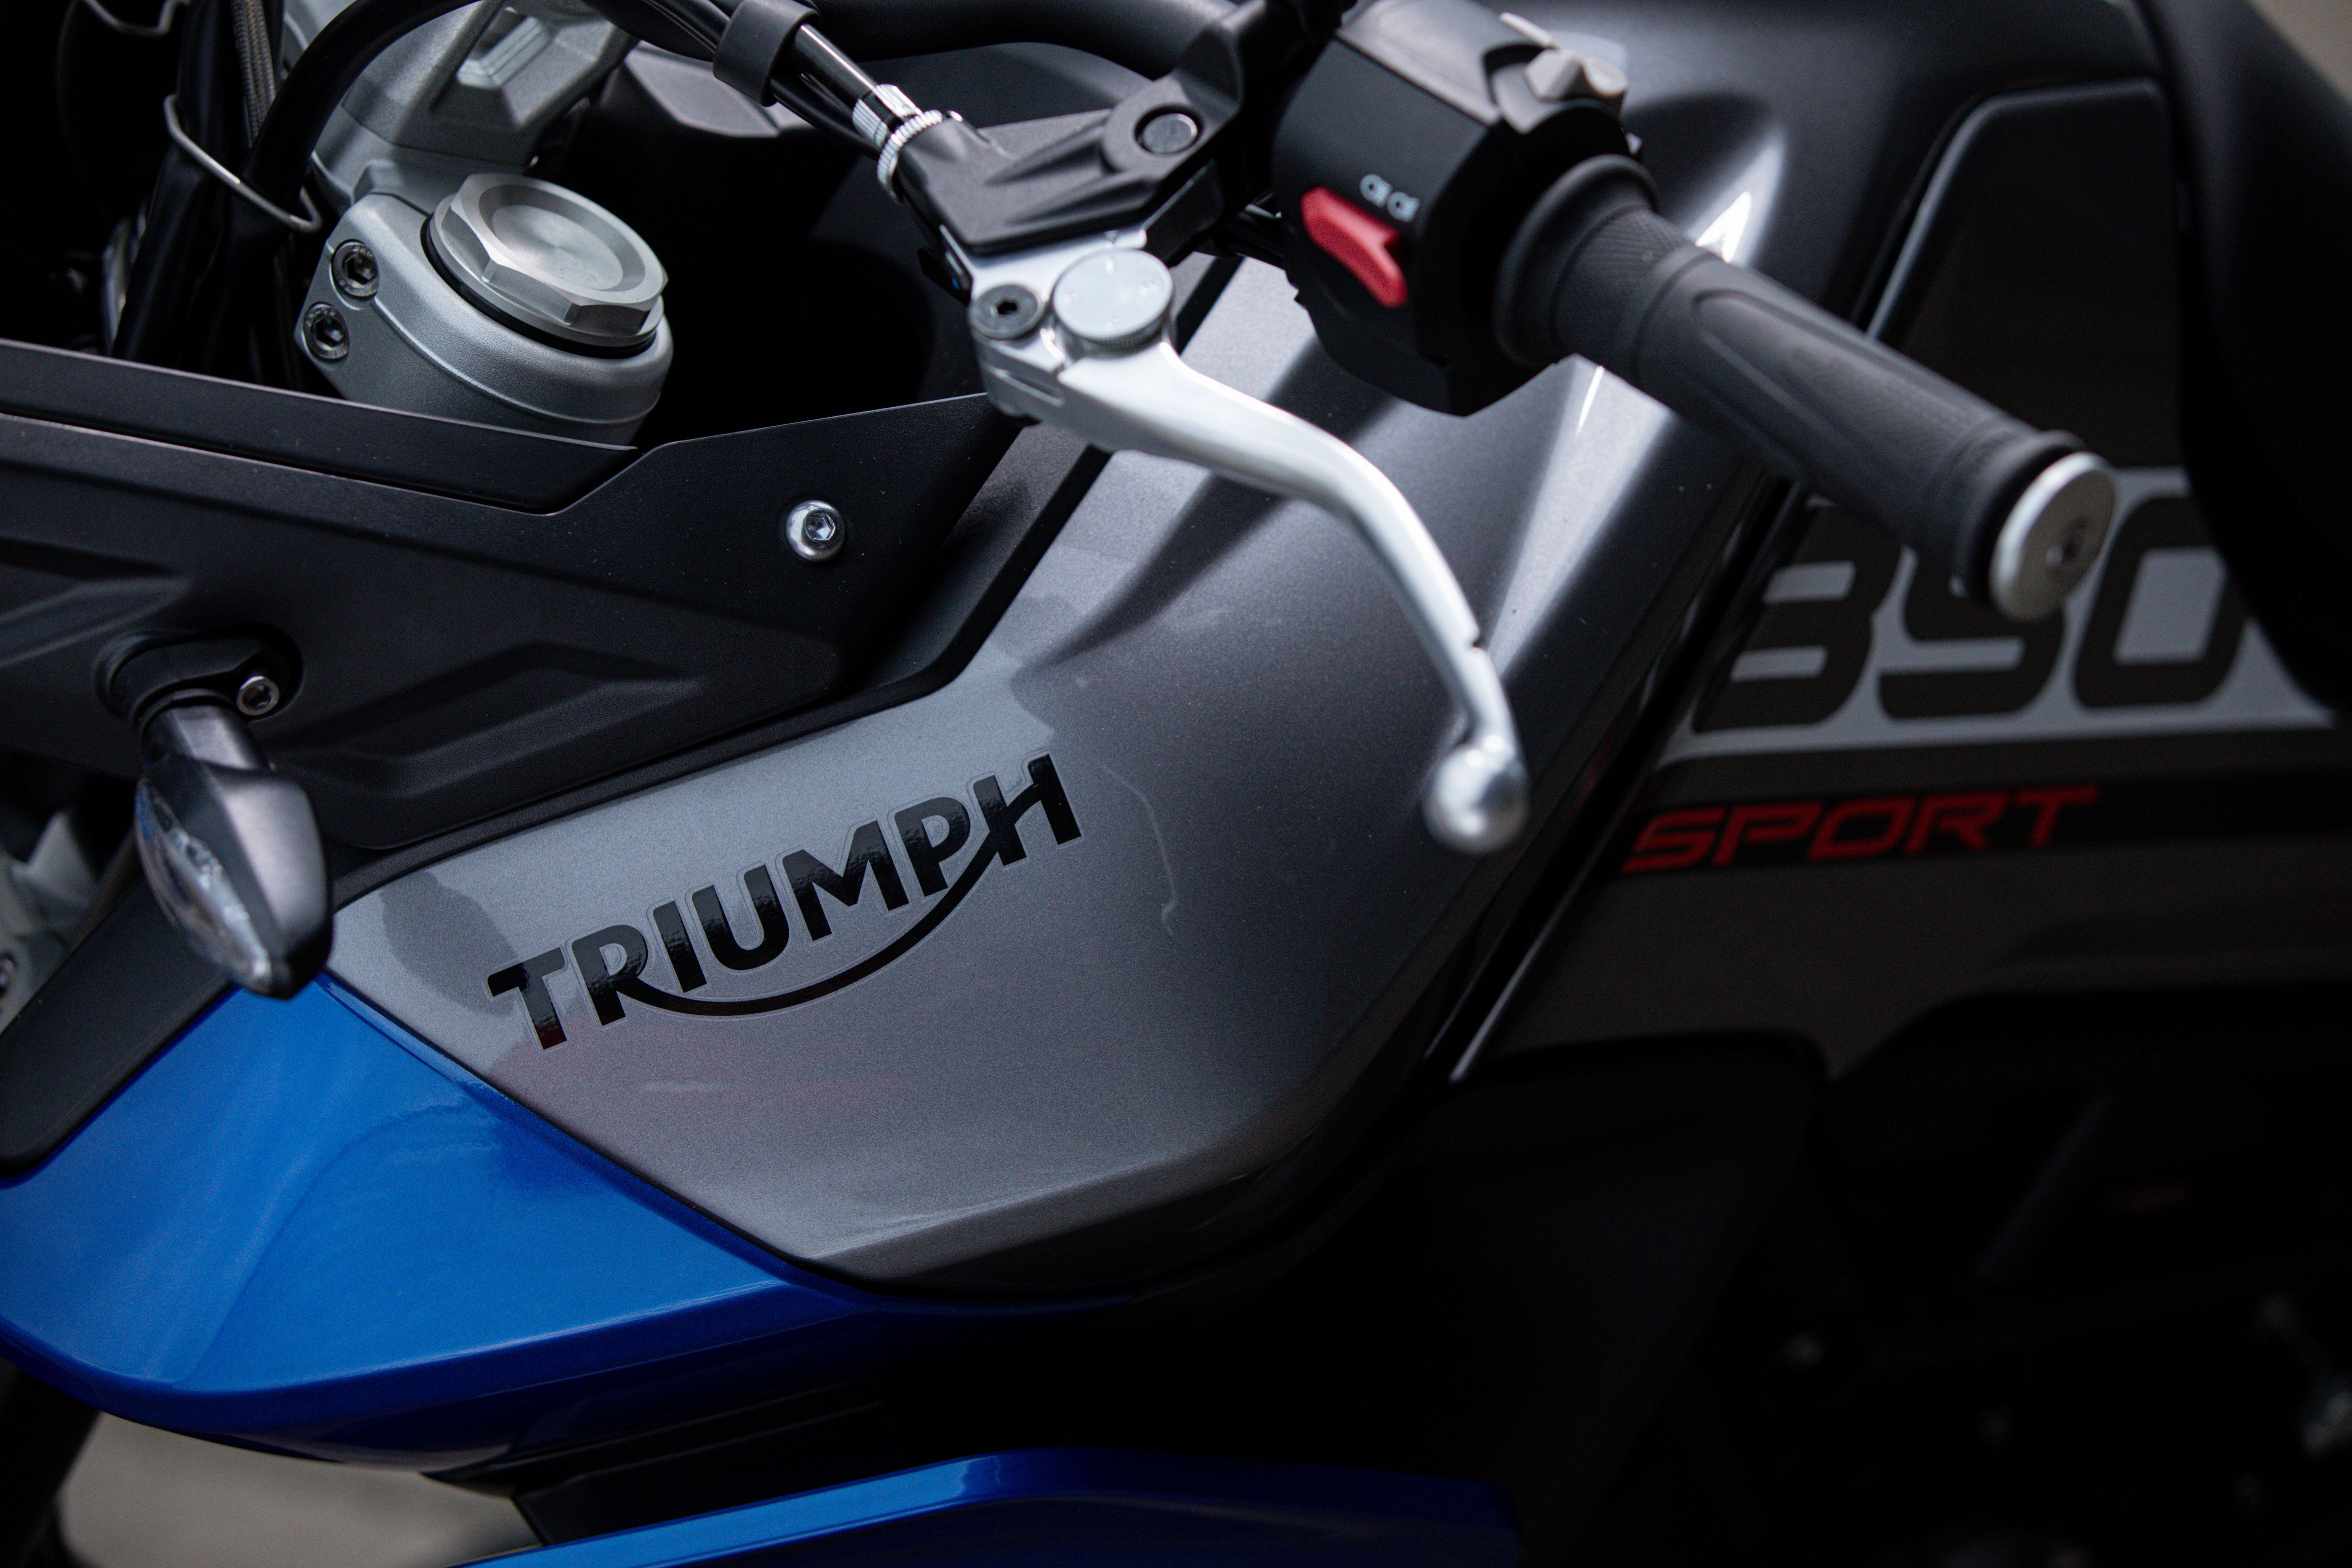 2021 - 2022 Triumph Tiger 850 Sport